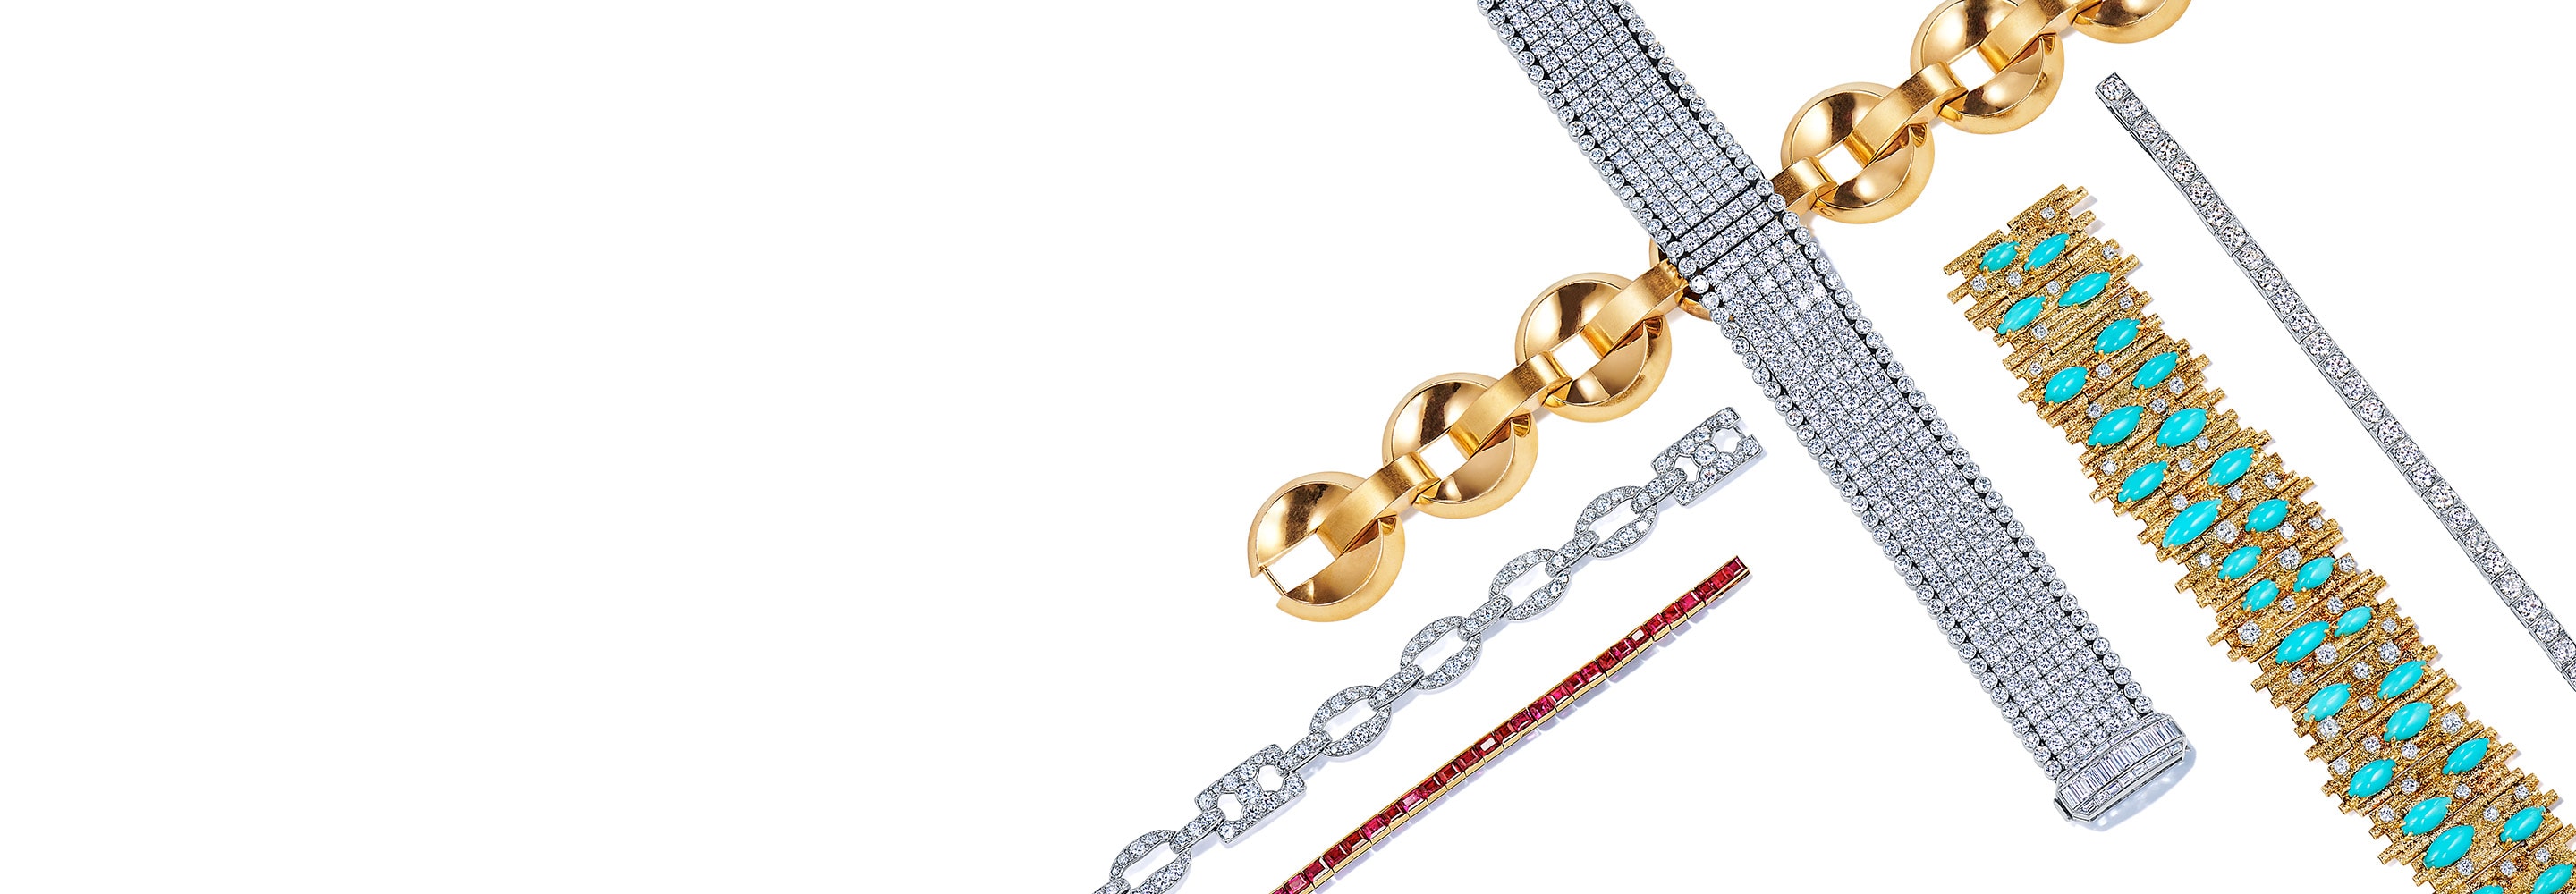 Fred Bennett Yellow Gold Plated Rectangle Link Chain Bracelet 21cm